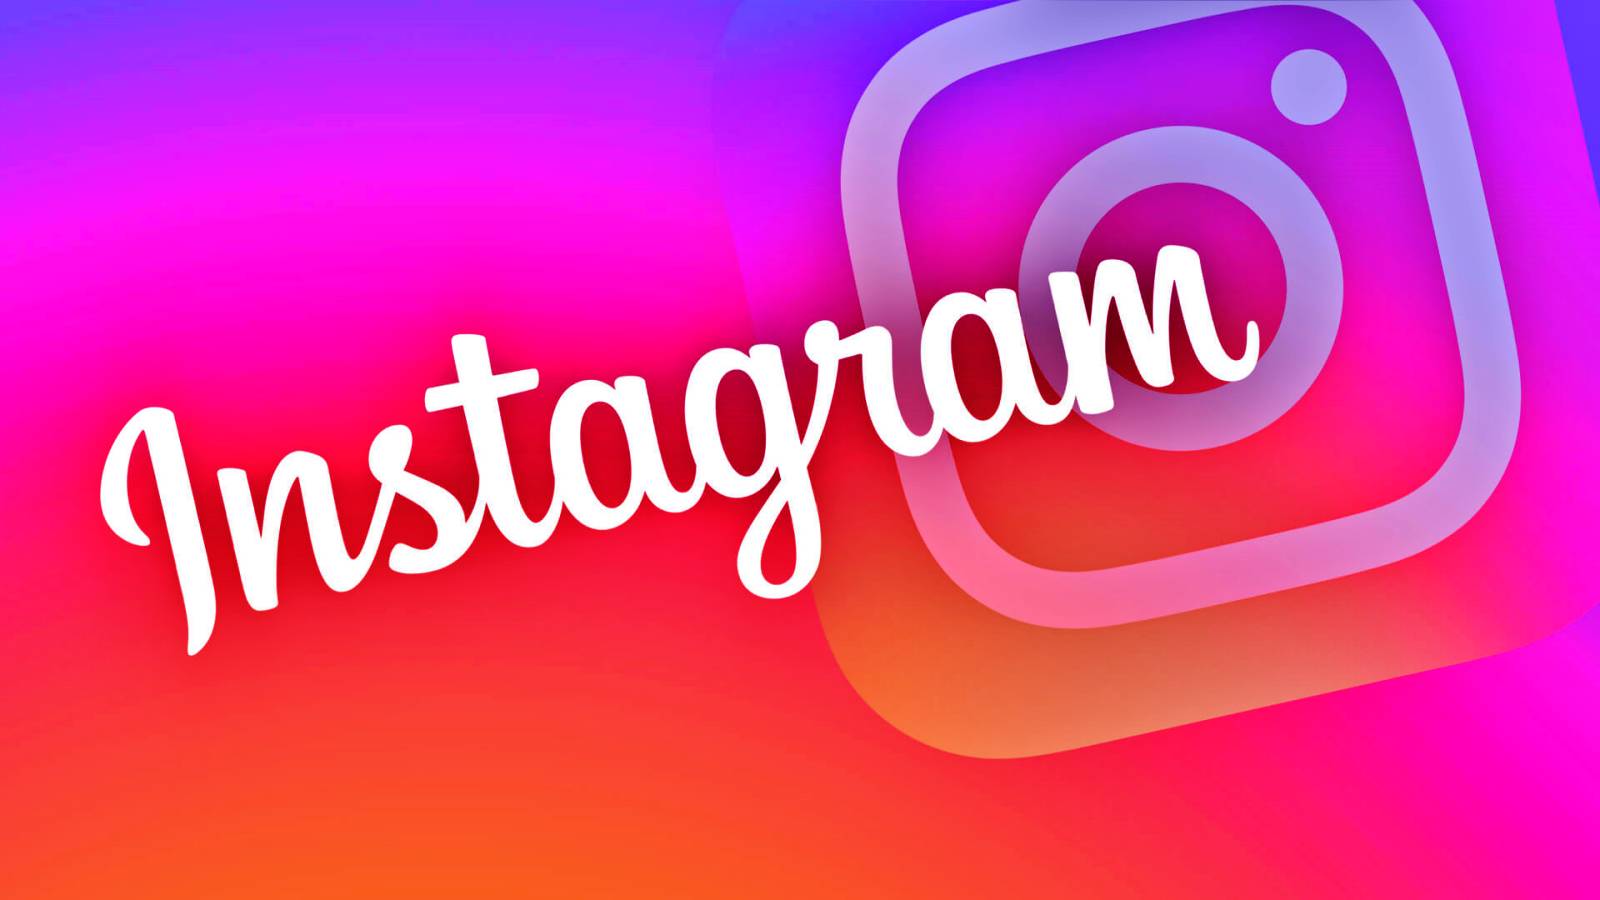 Aplicatia Instagram a fost Actualizata, ce Schimbari sunt Oferite in Telefoane